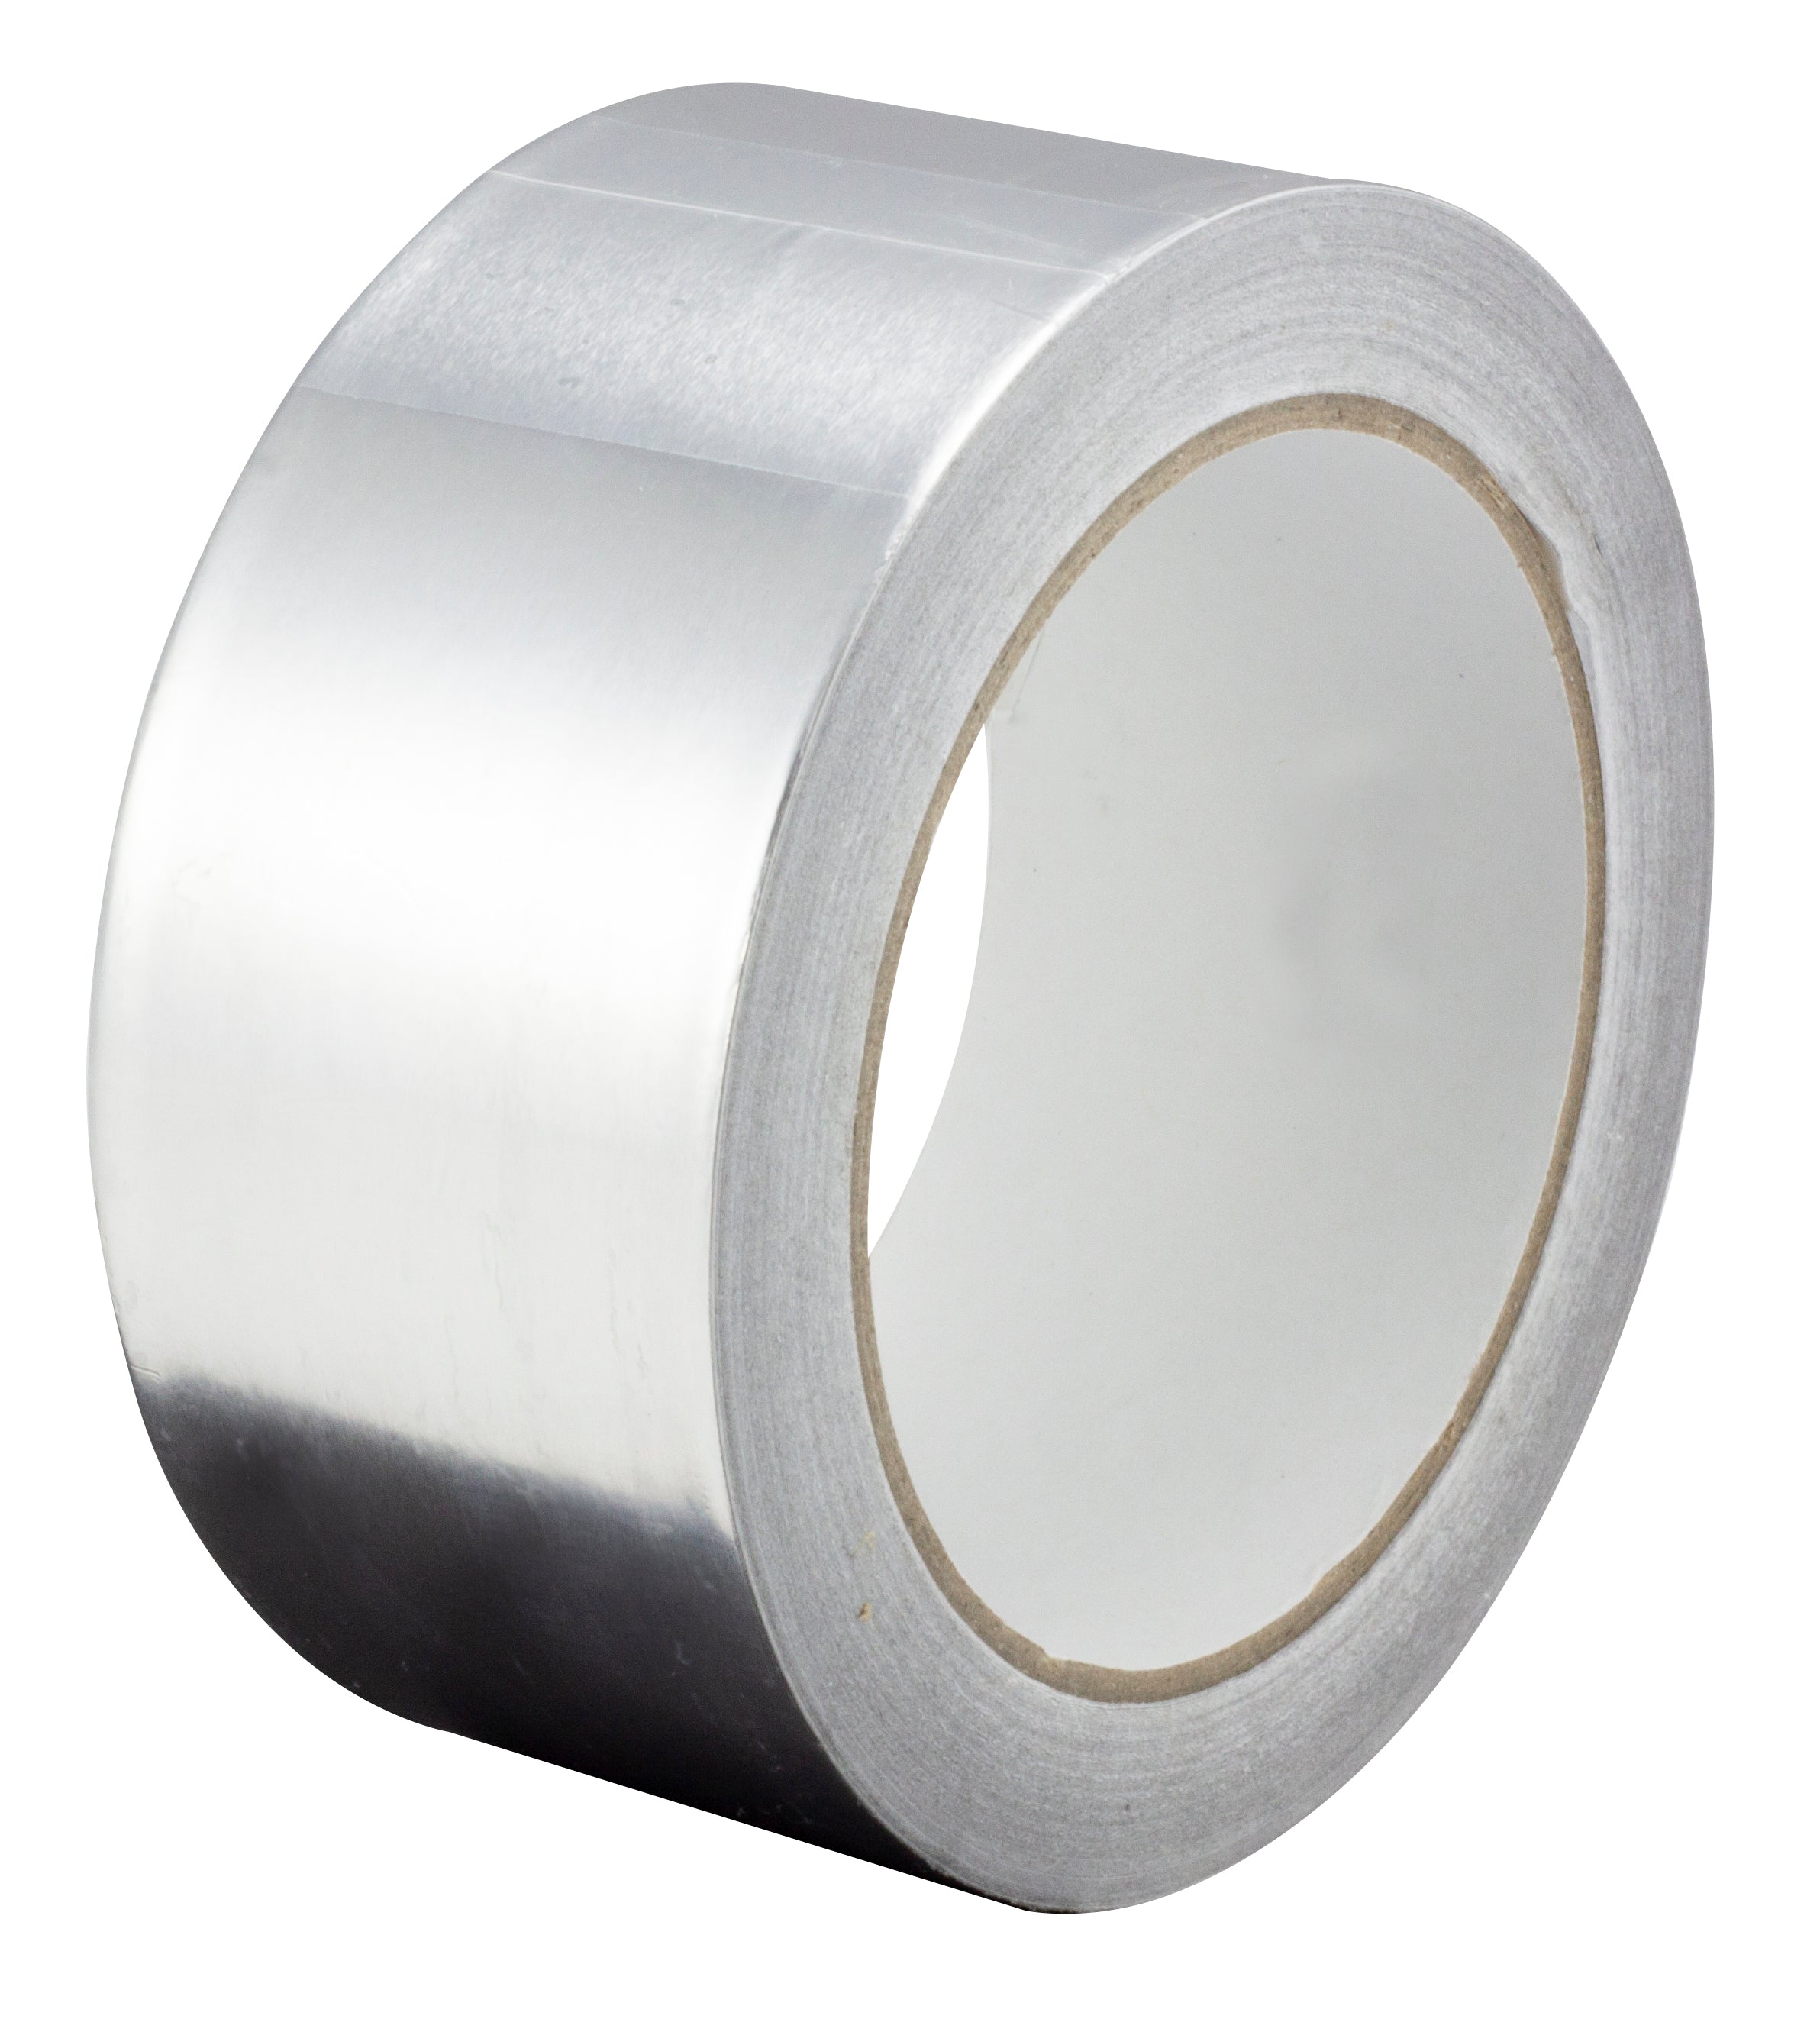 Aluminium Foil Tape 48mm x 25m 40 Micron Thickness. Adhesive Type - Per Roll